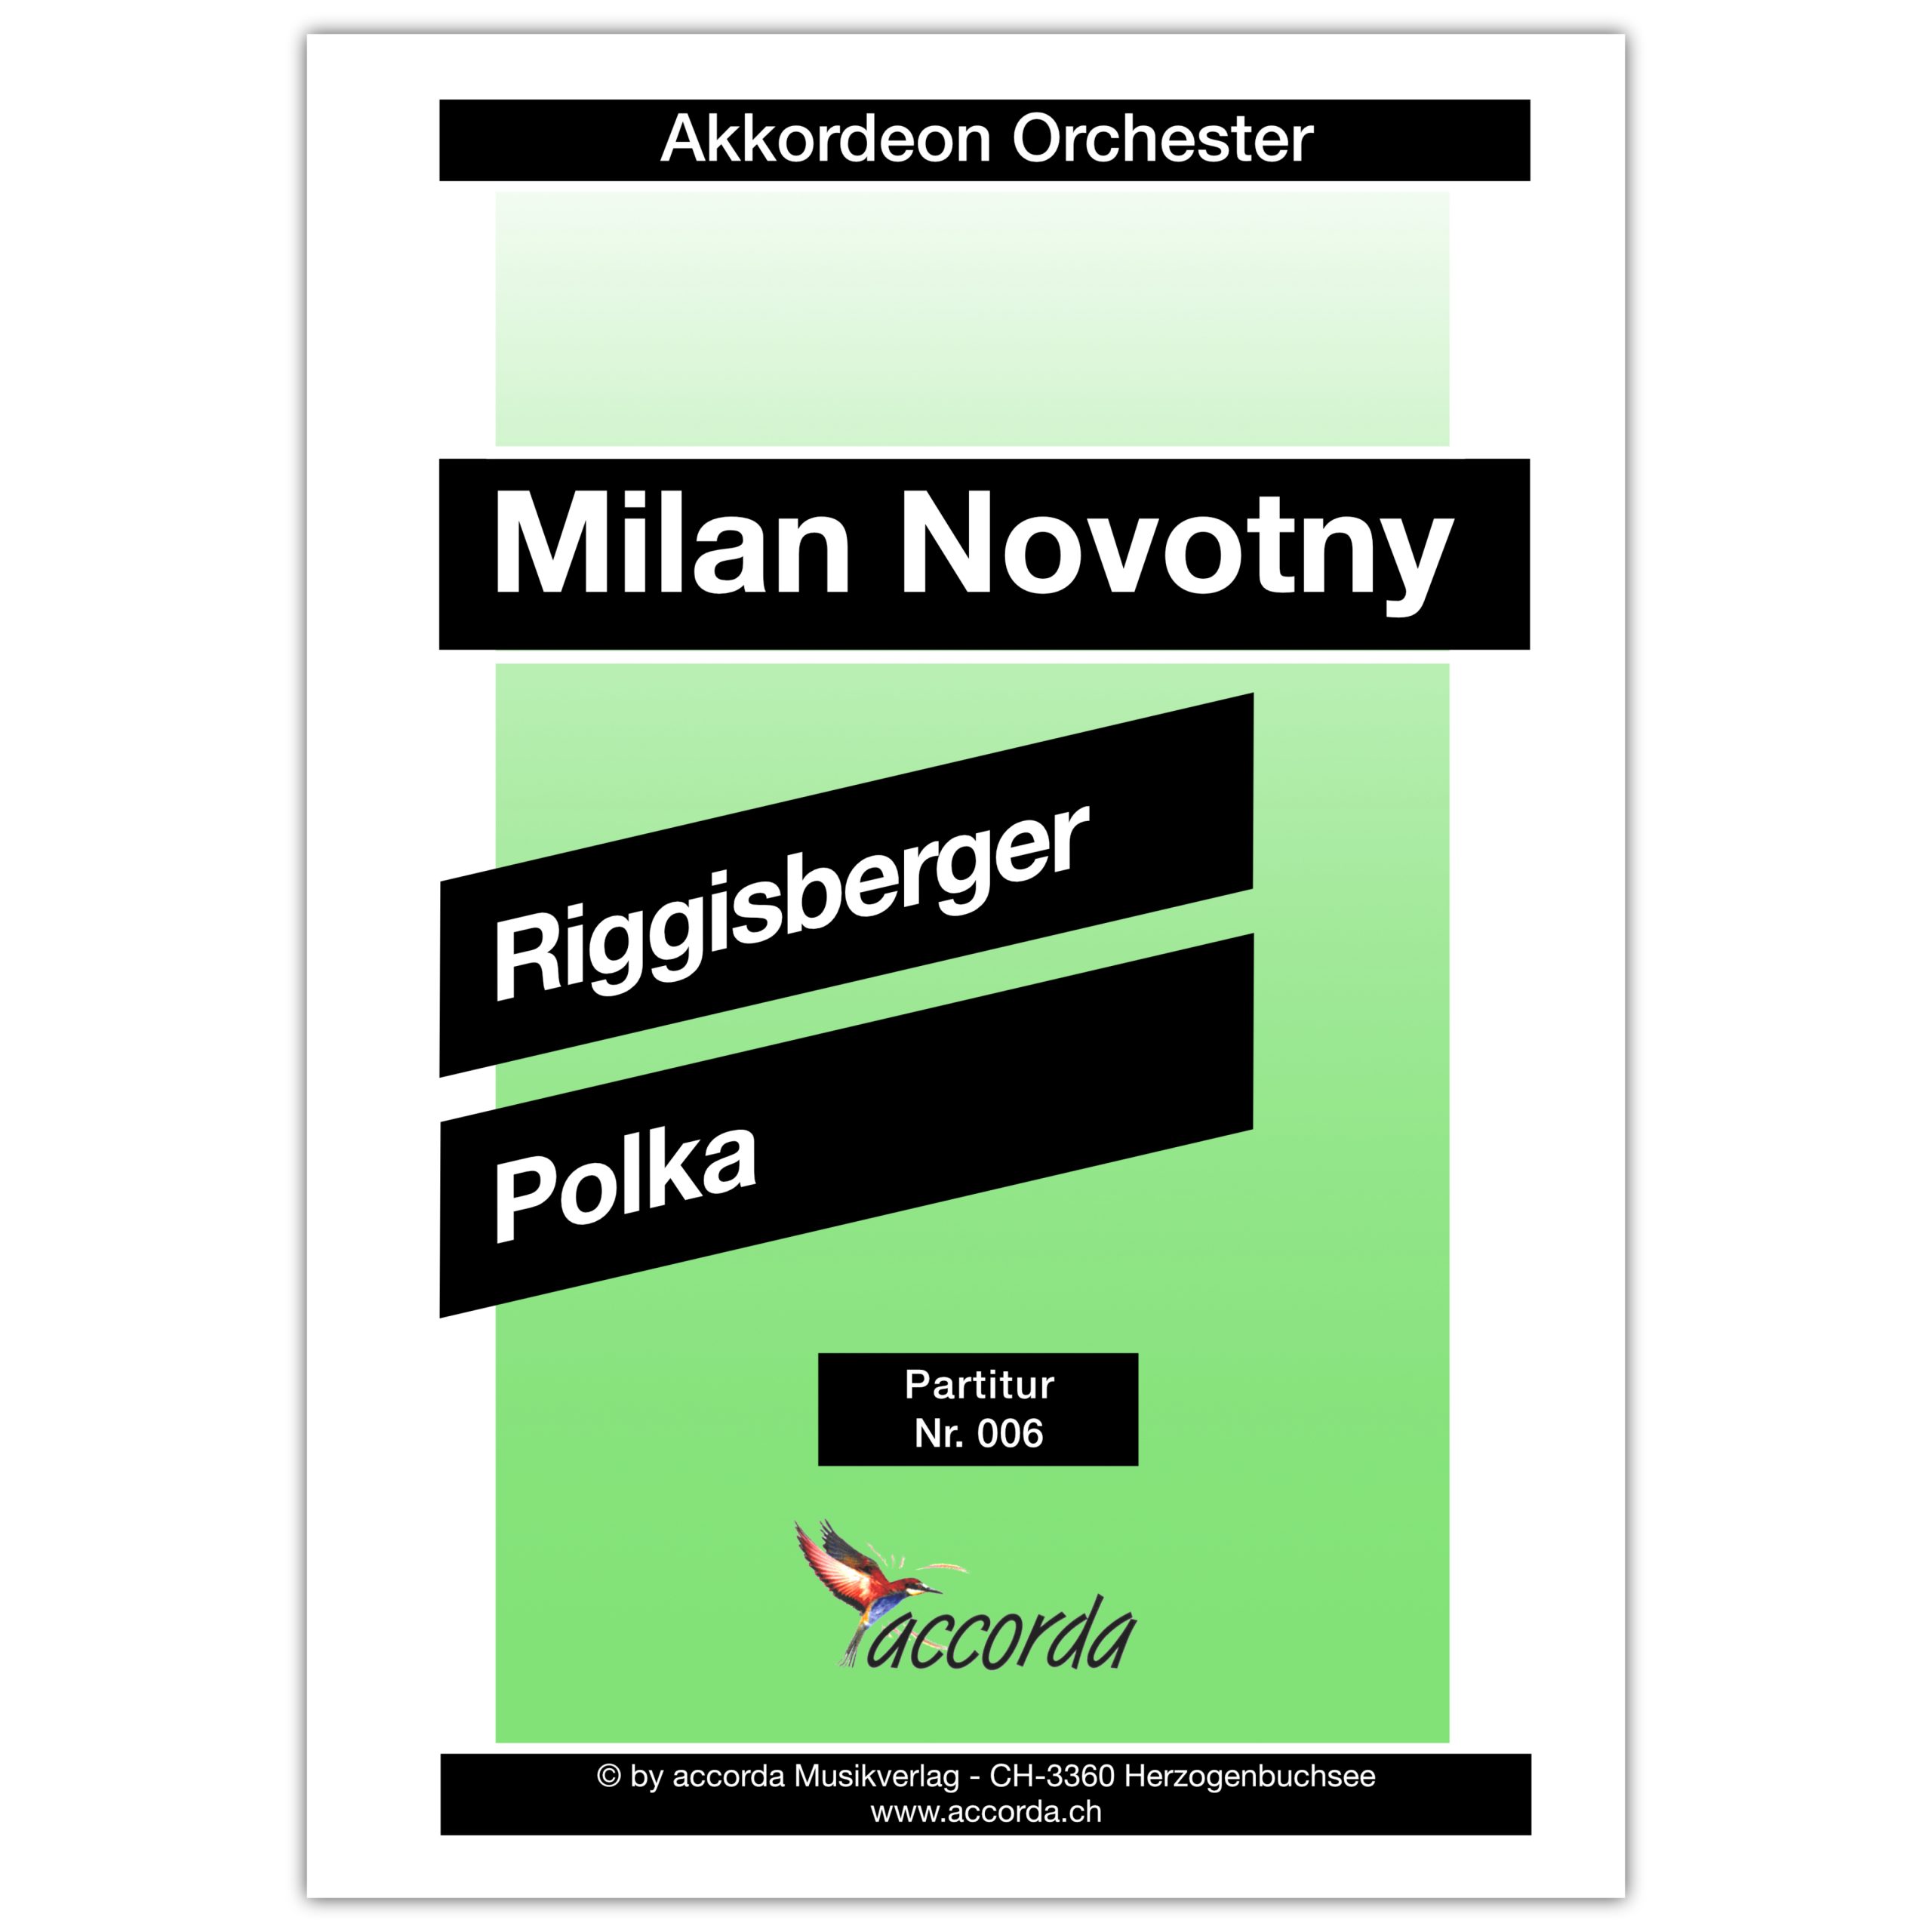 Riggisberger Polka